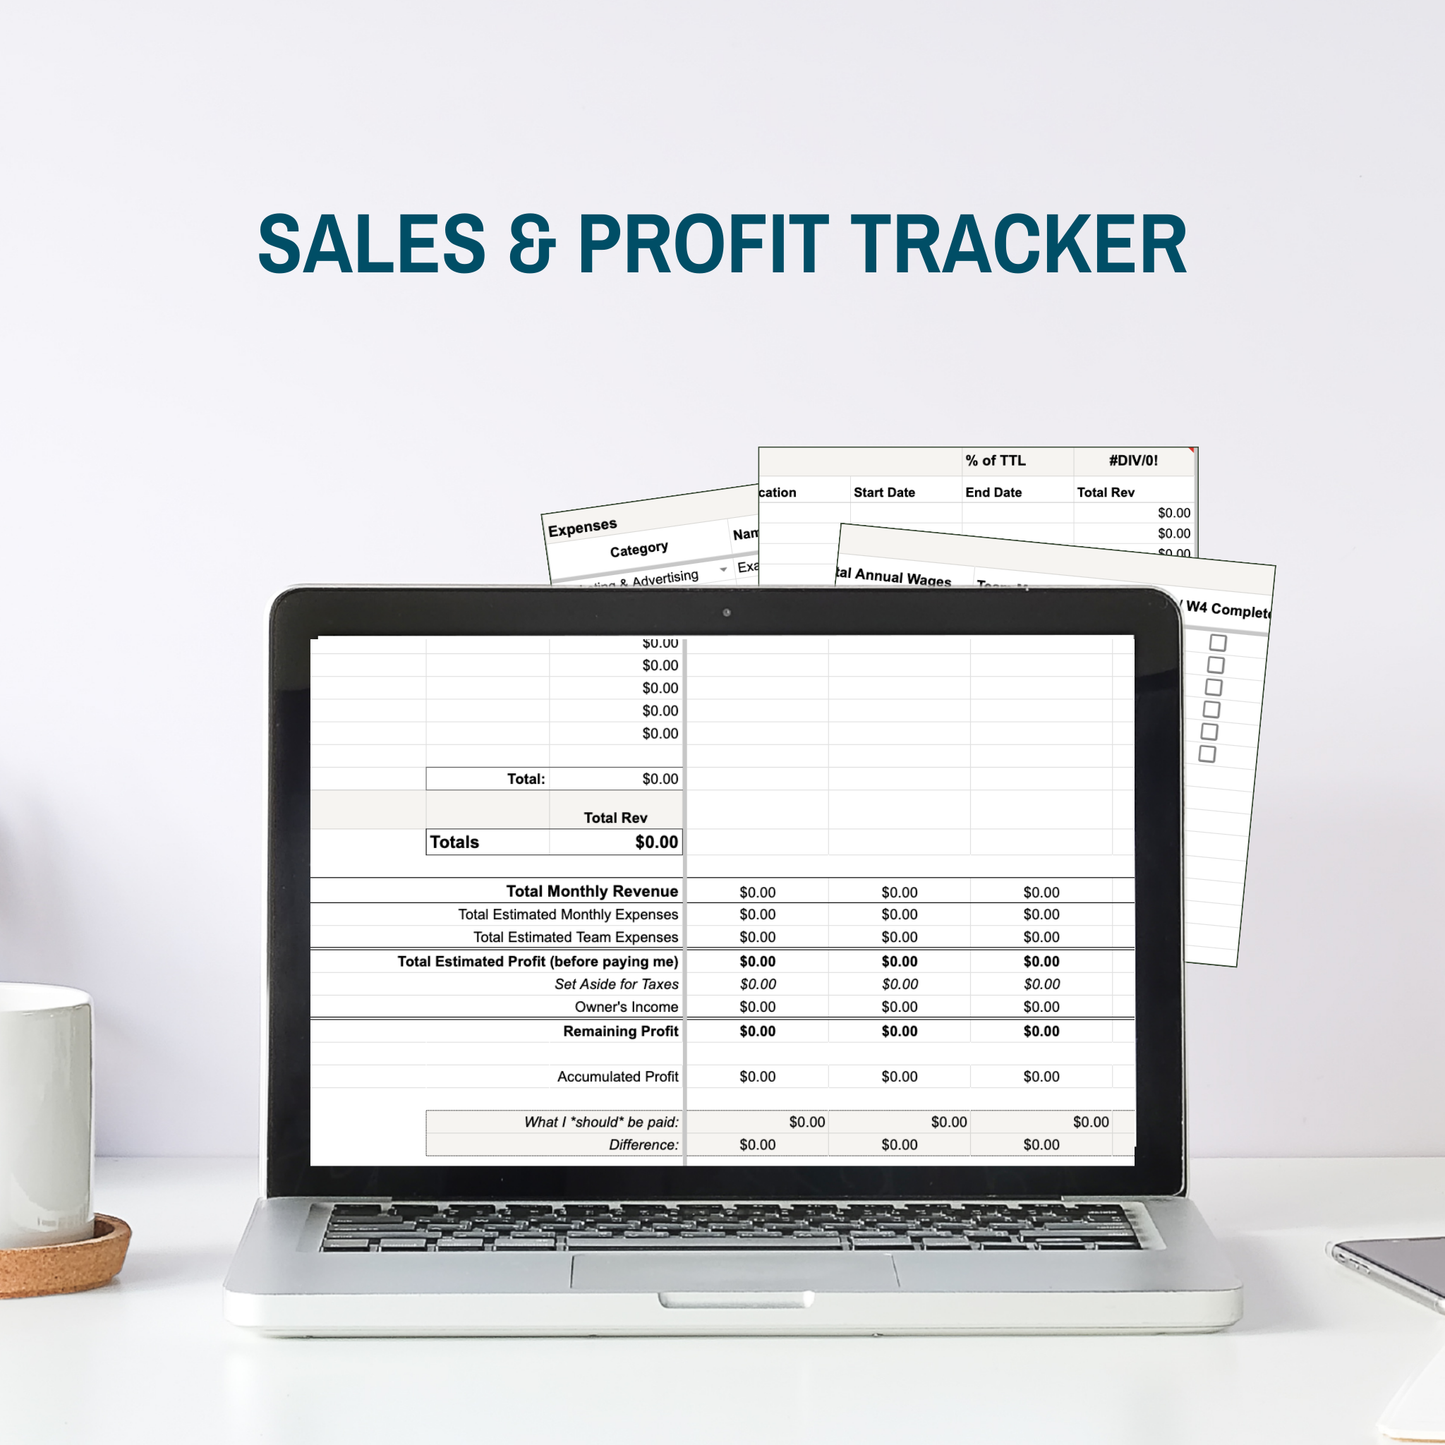 Sales & Profit Tracker